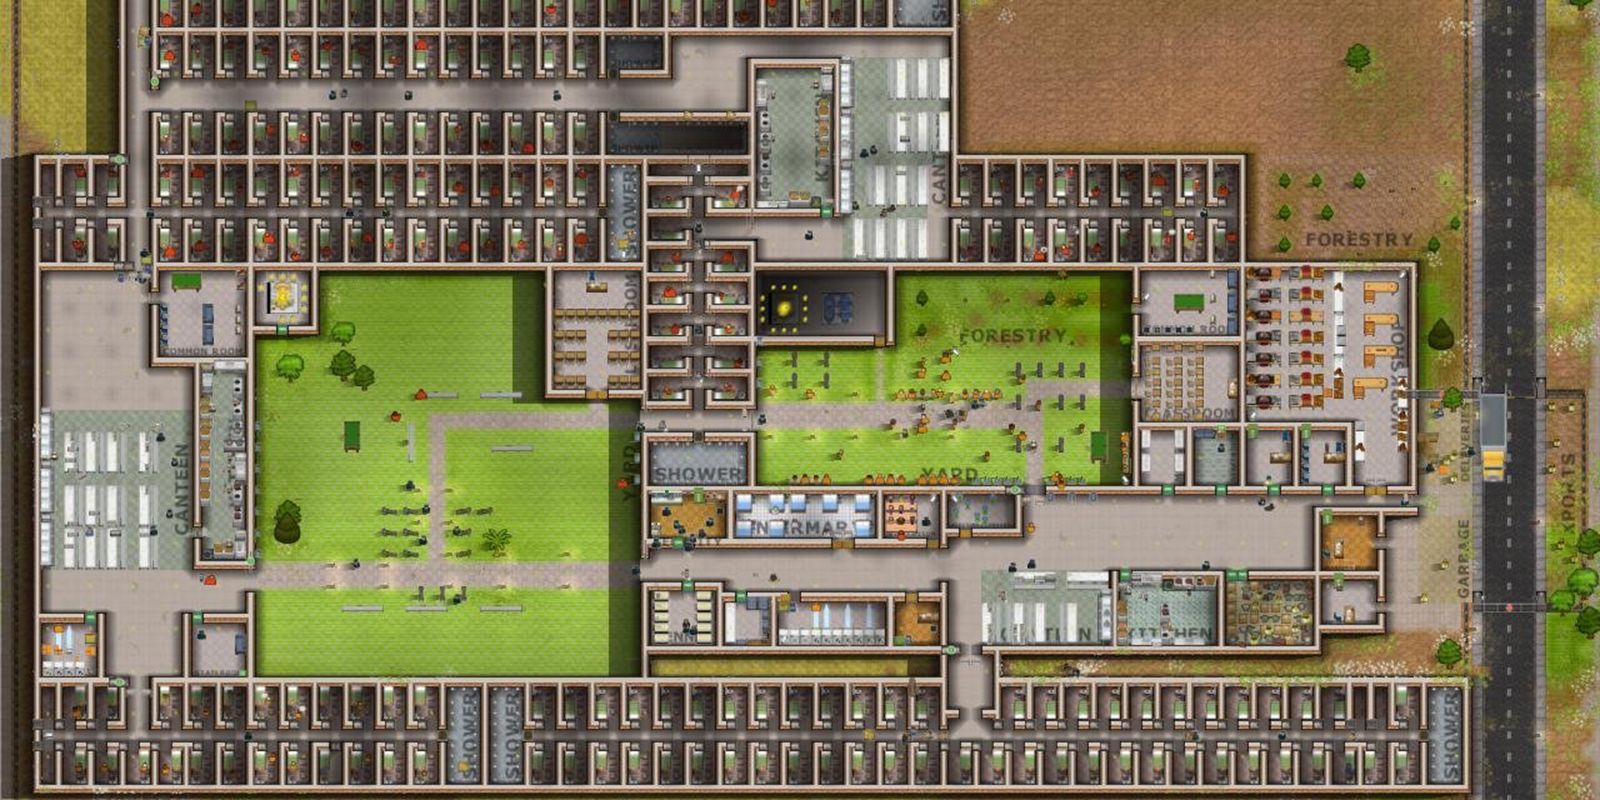 the best prison architect layout